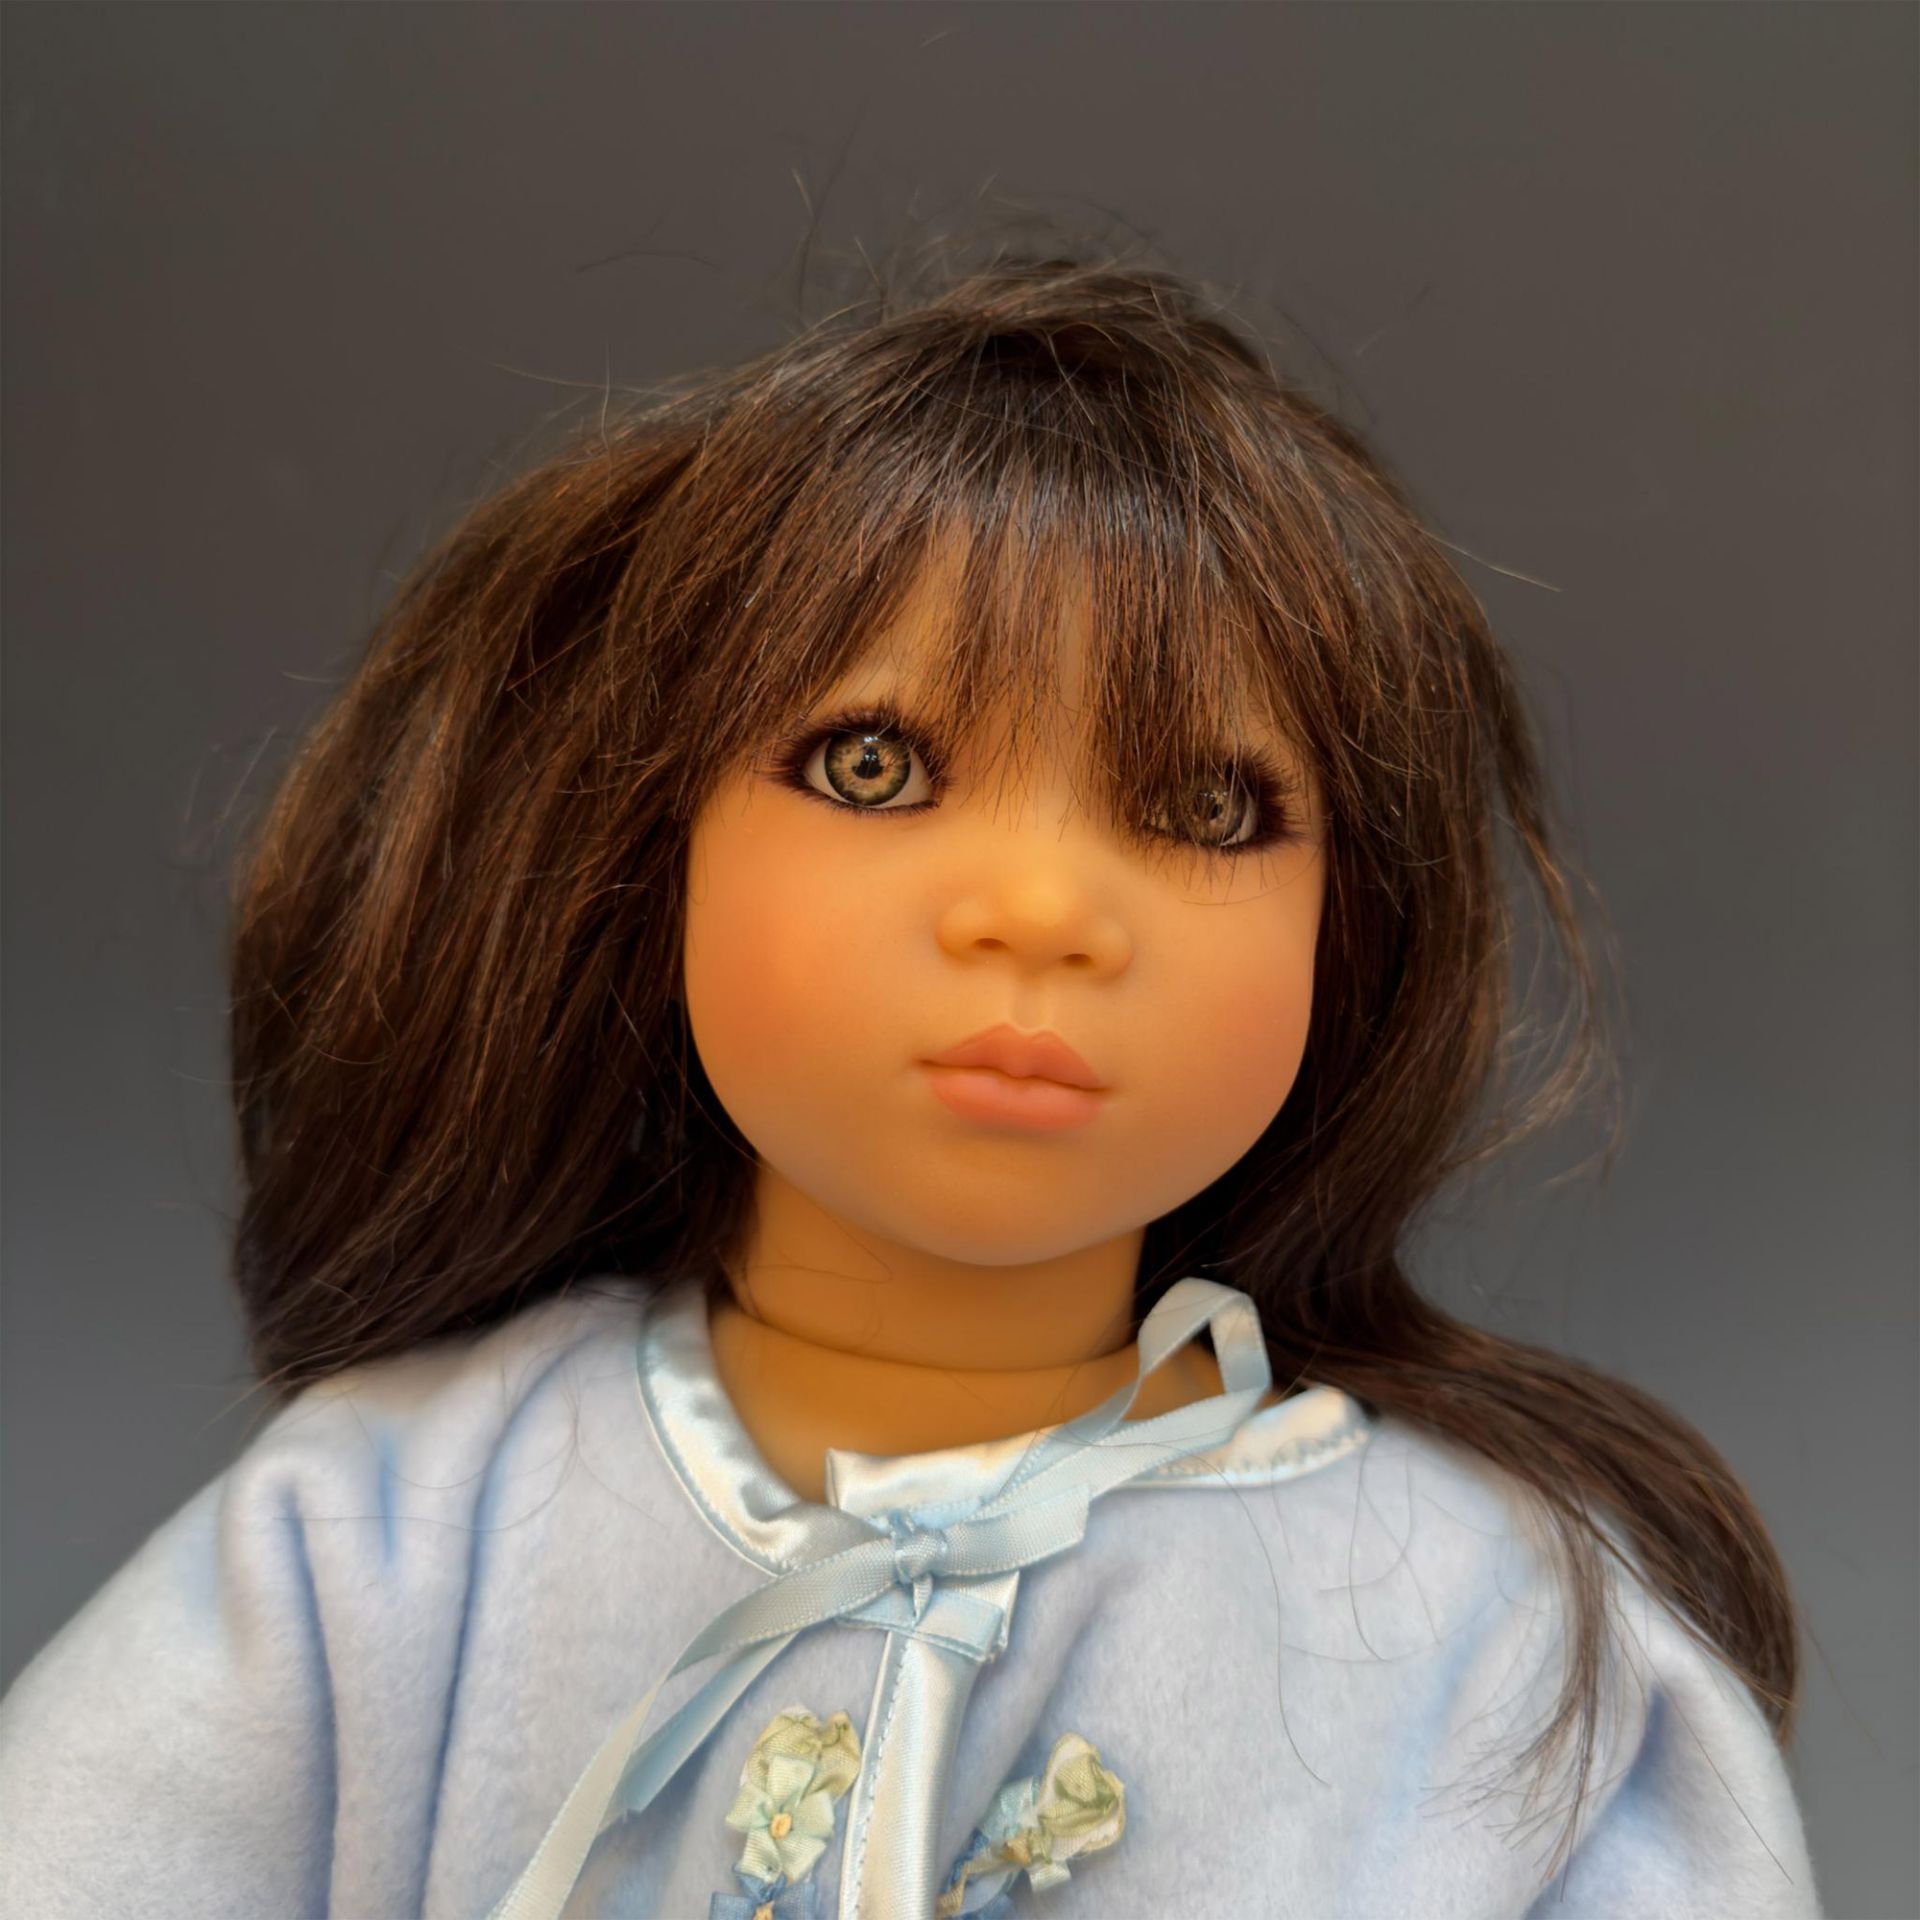 Annette Himstedt Puppen Kinder Doll, Anna II - Bild 2 aus 9